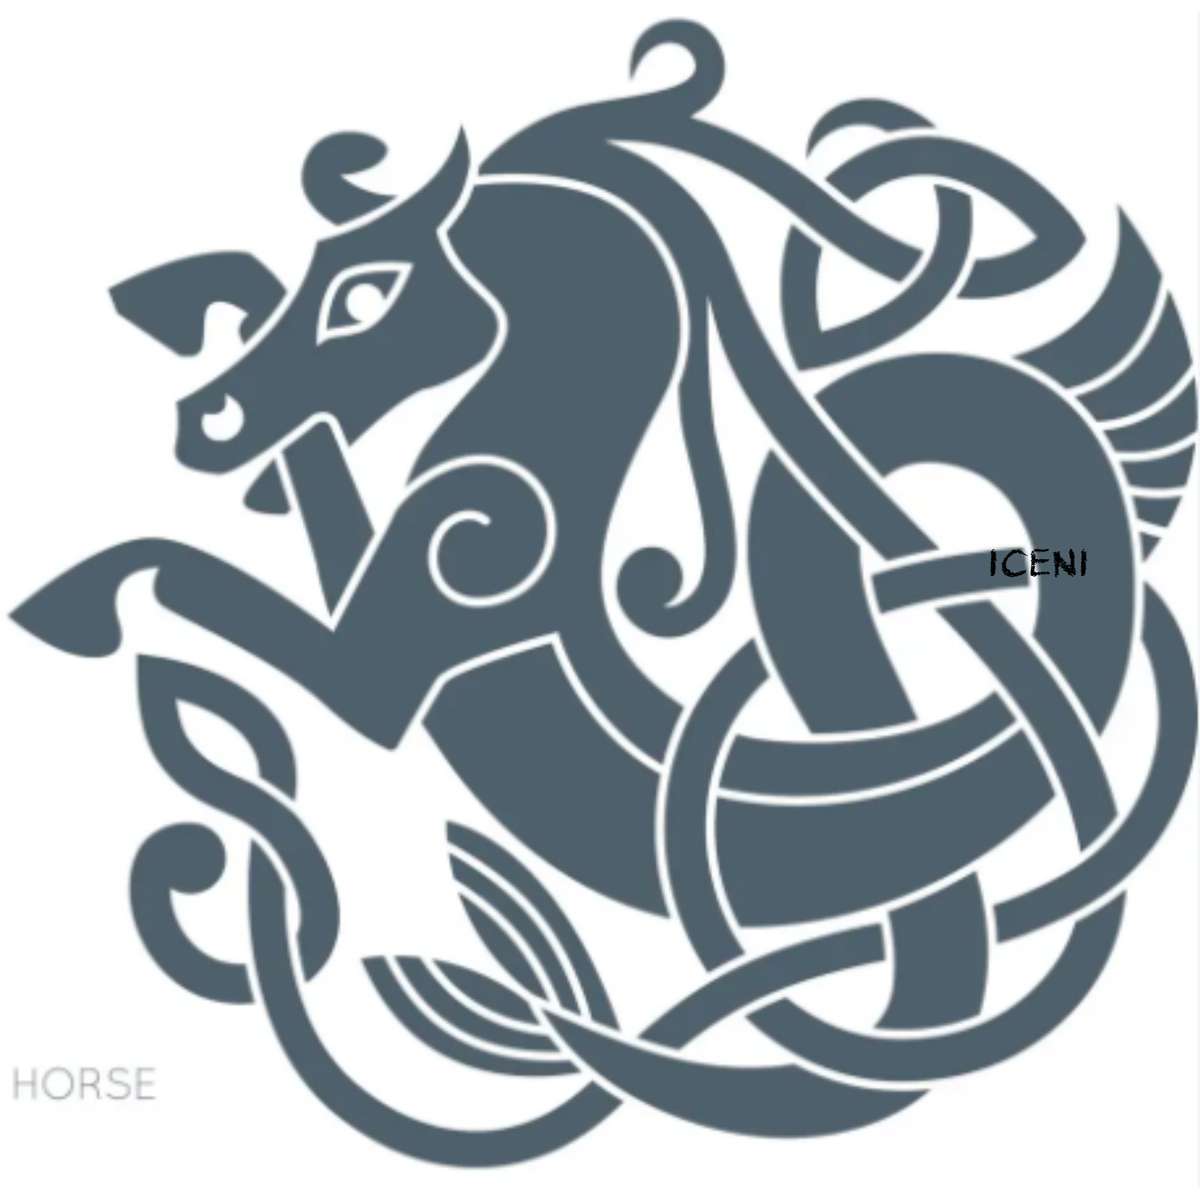 Paard Iceni online puzzel